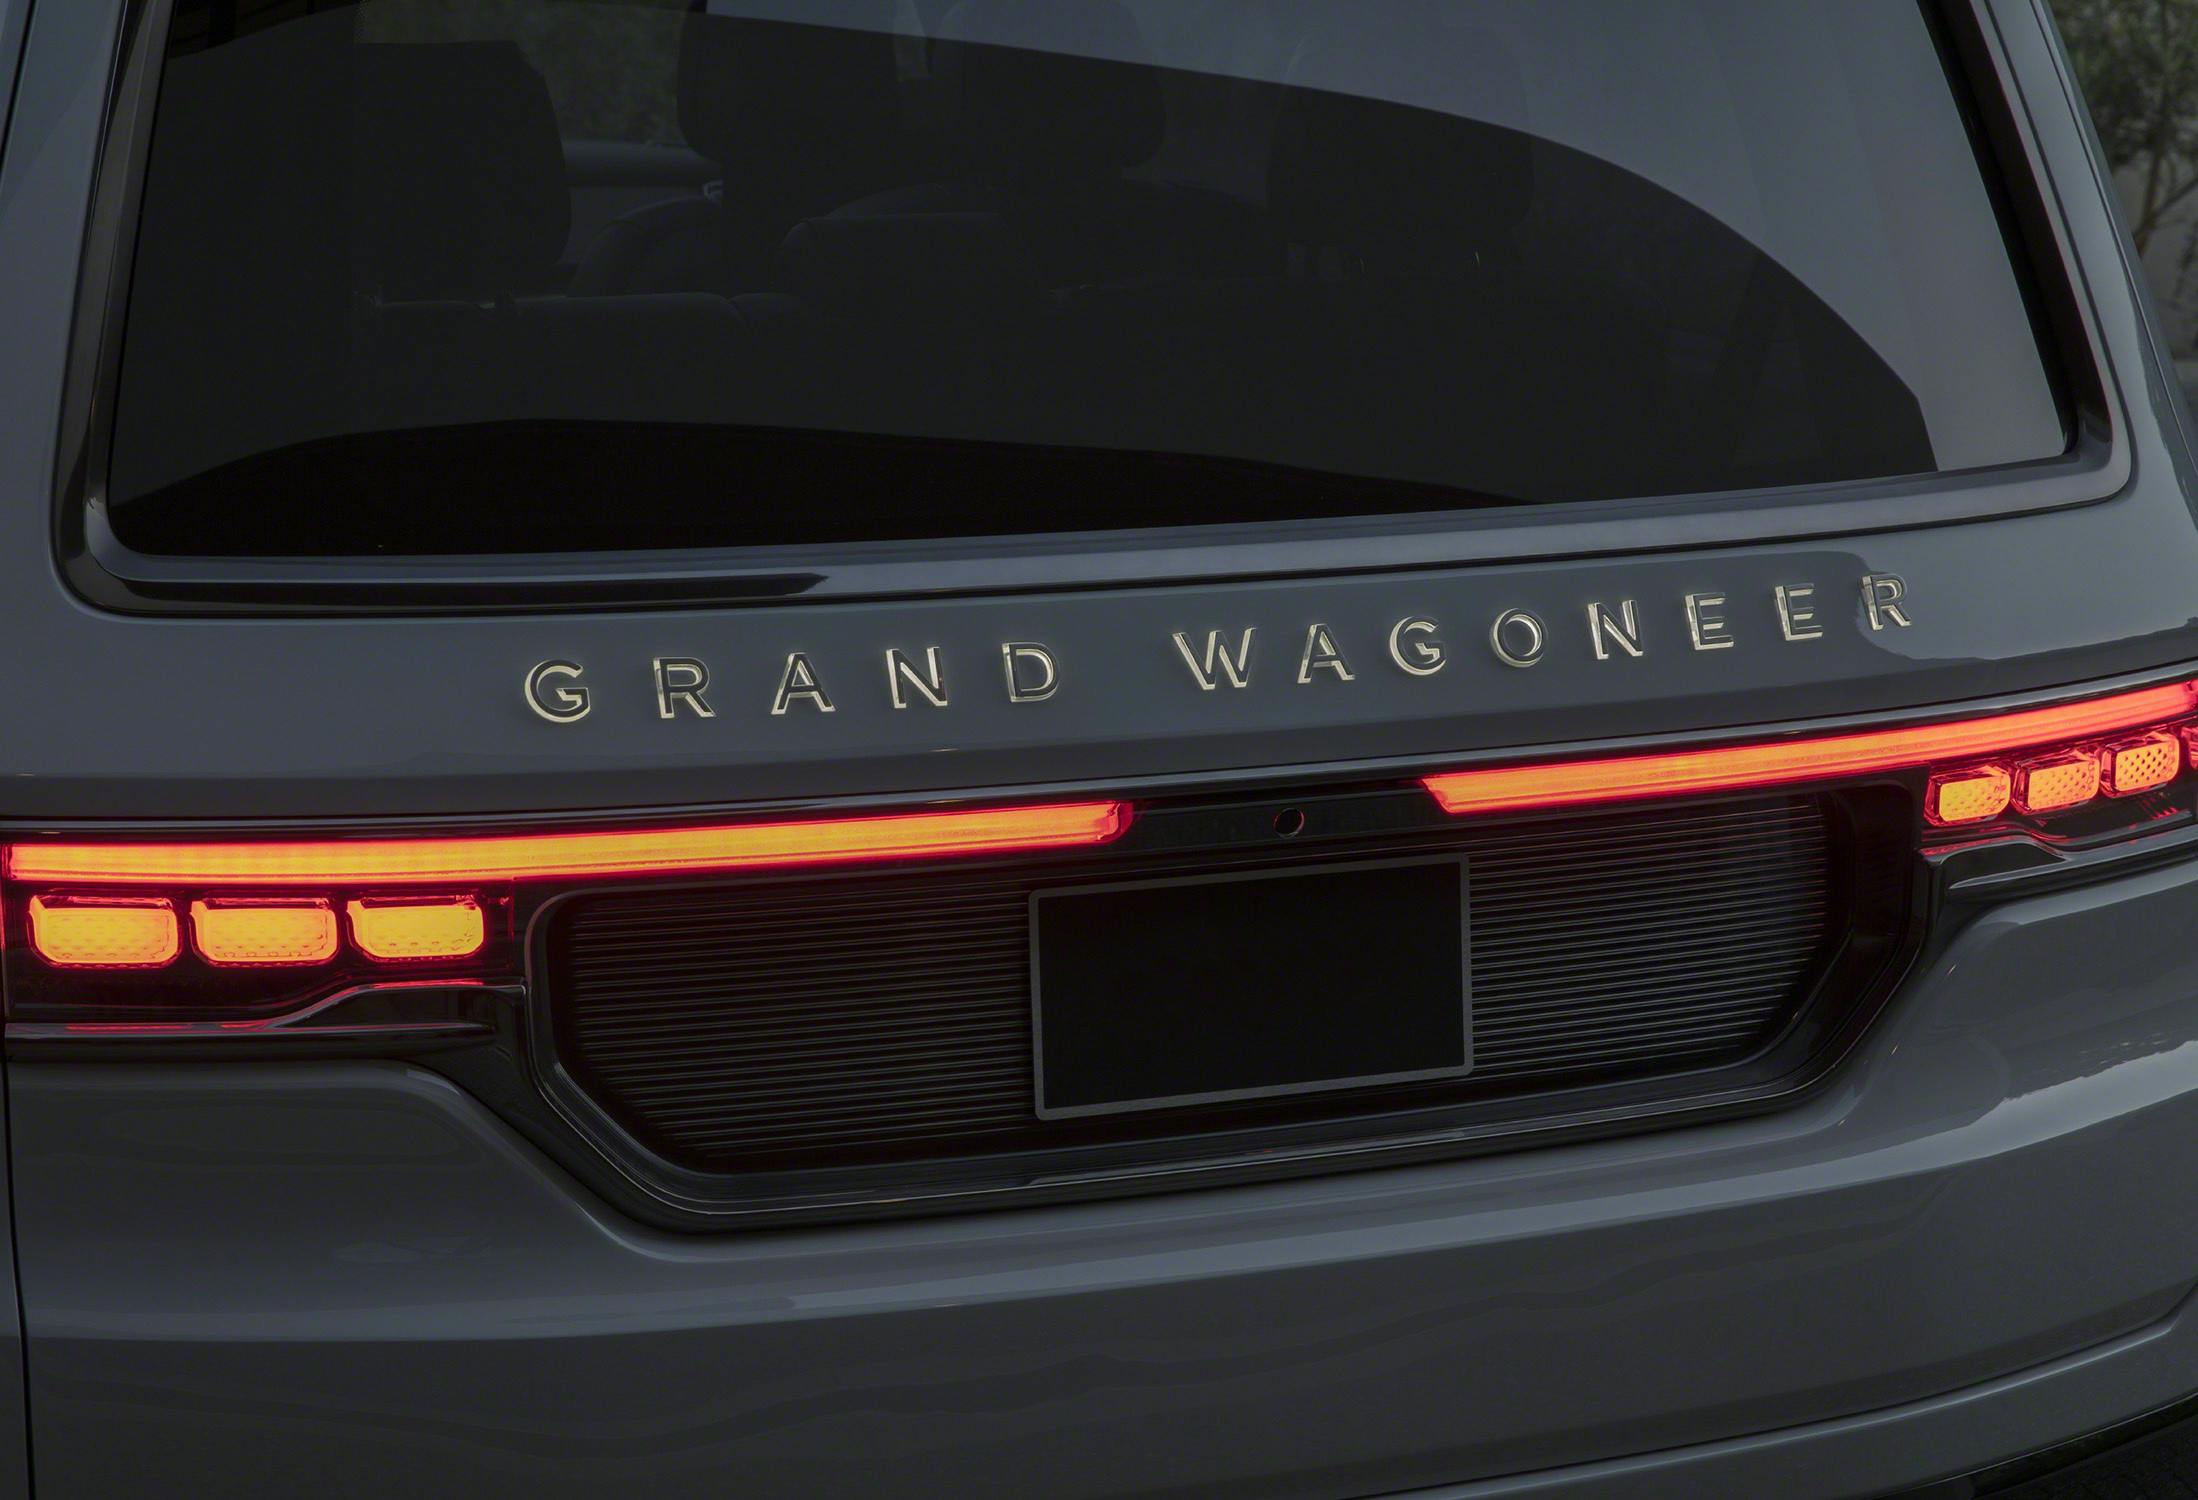 Grand Wagoneer Concept illuminated rear badges